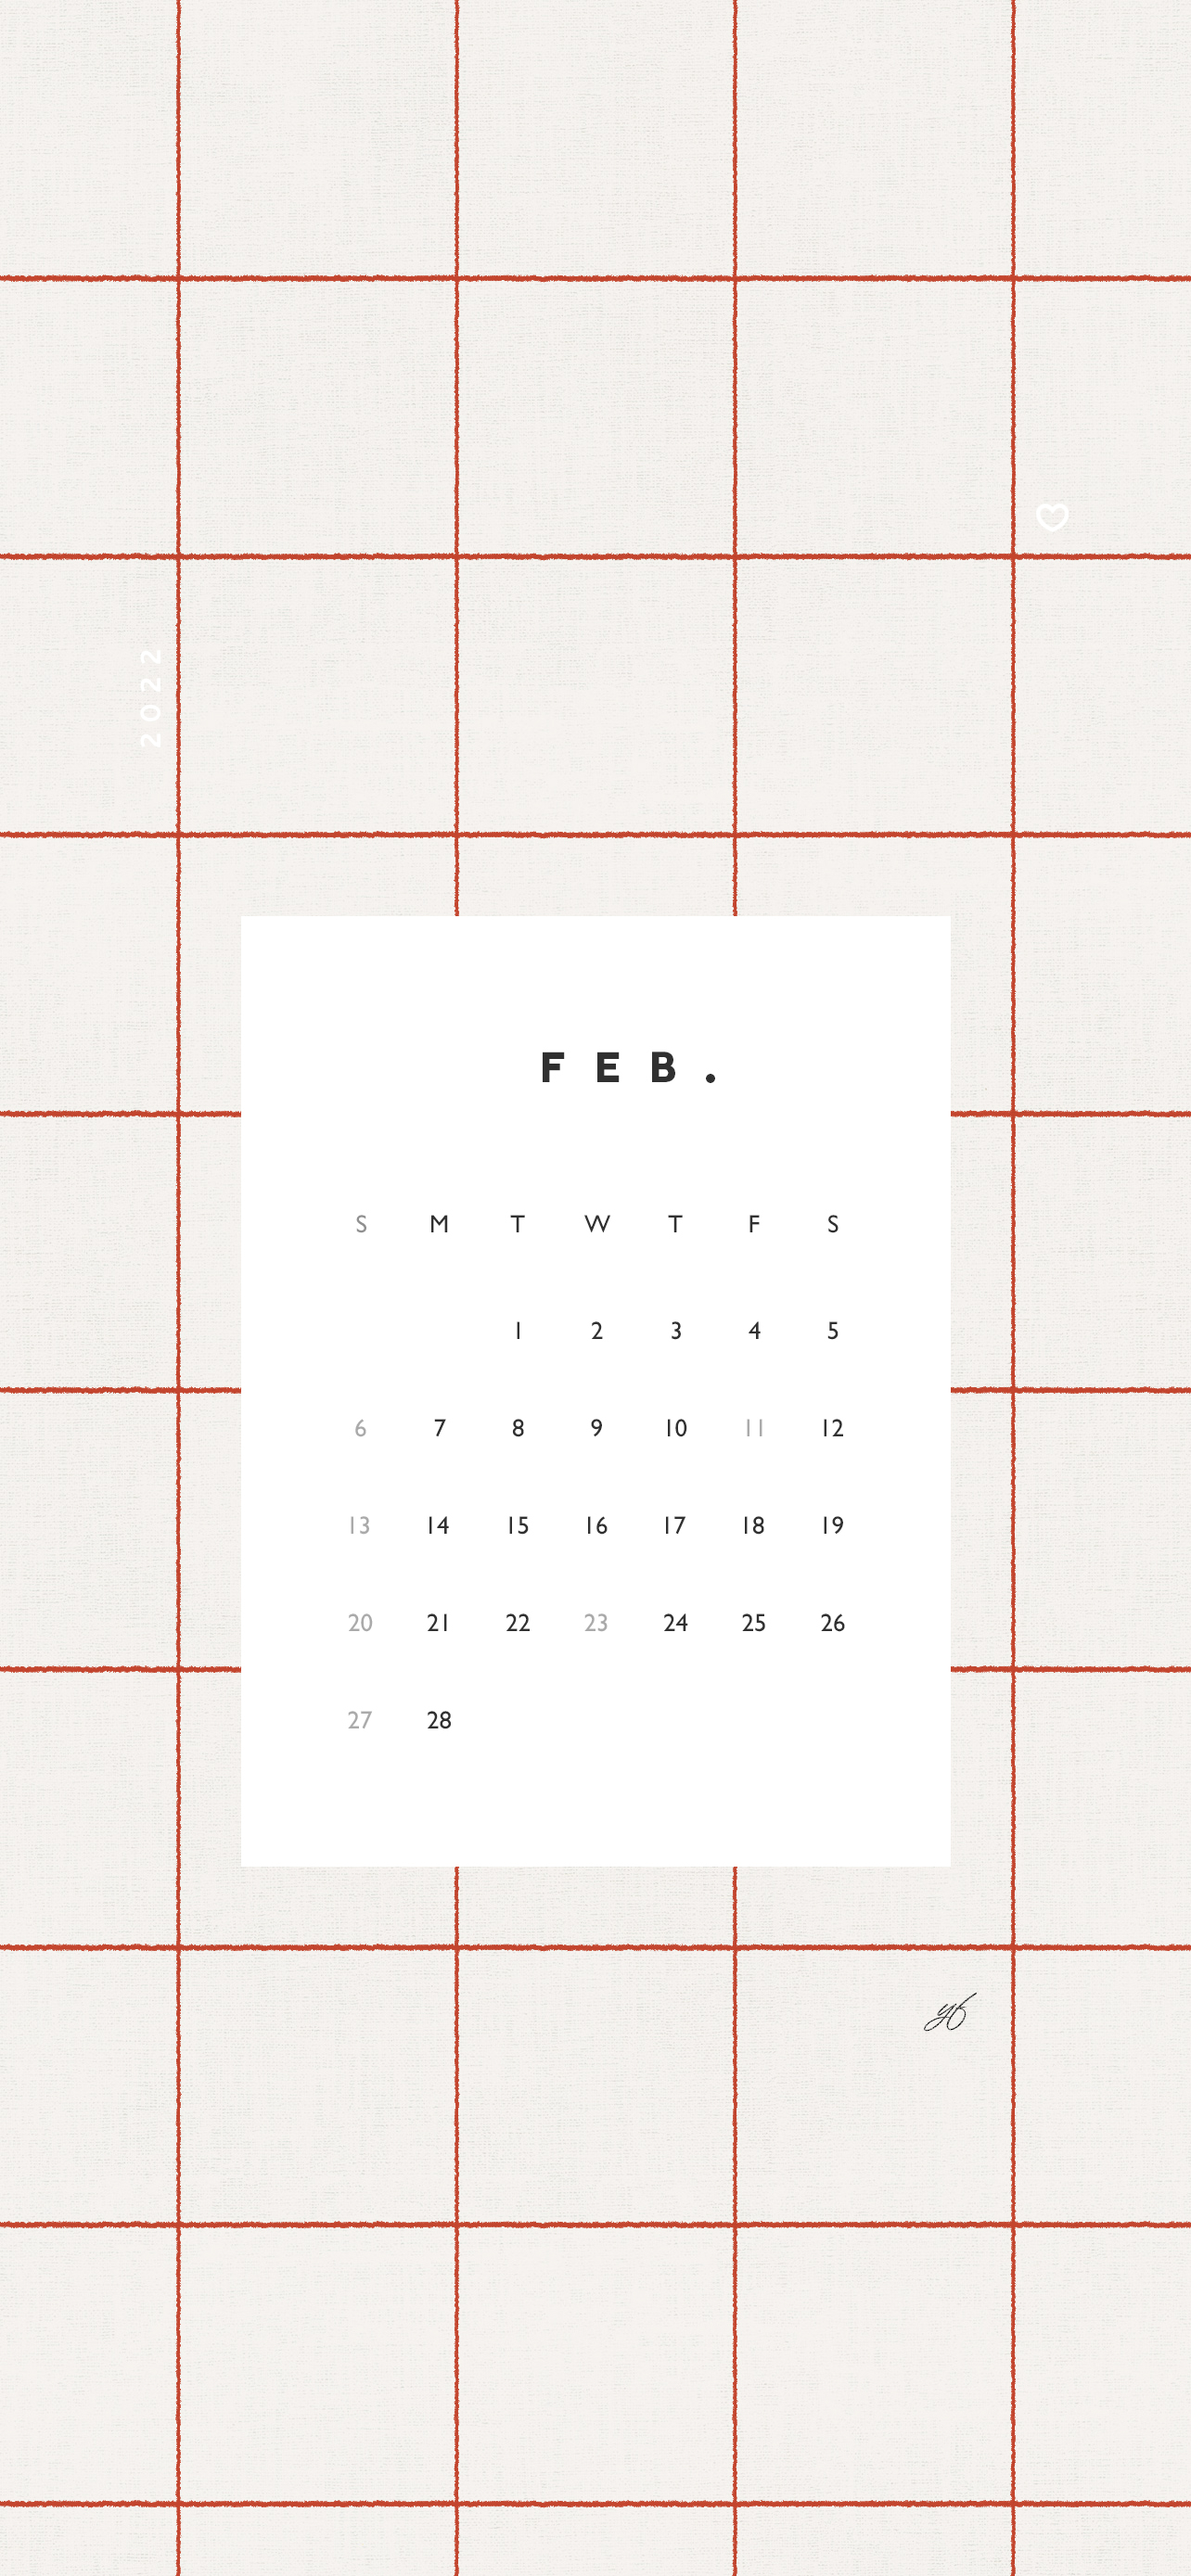 February 22 Calendar Wallpaper For The Iphone Design By Yf